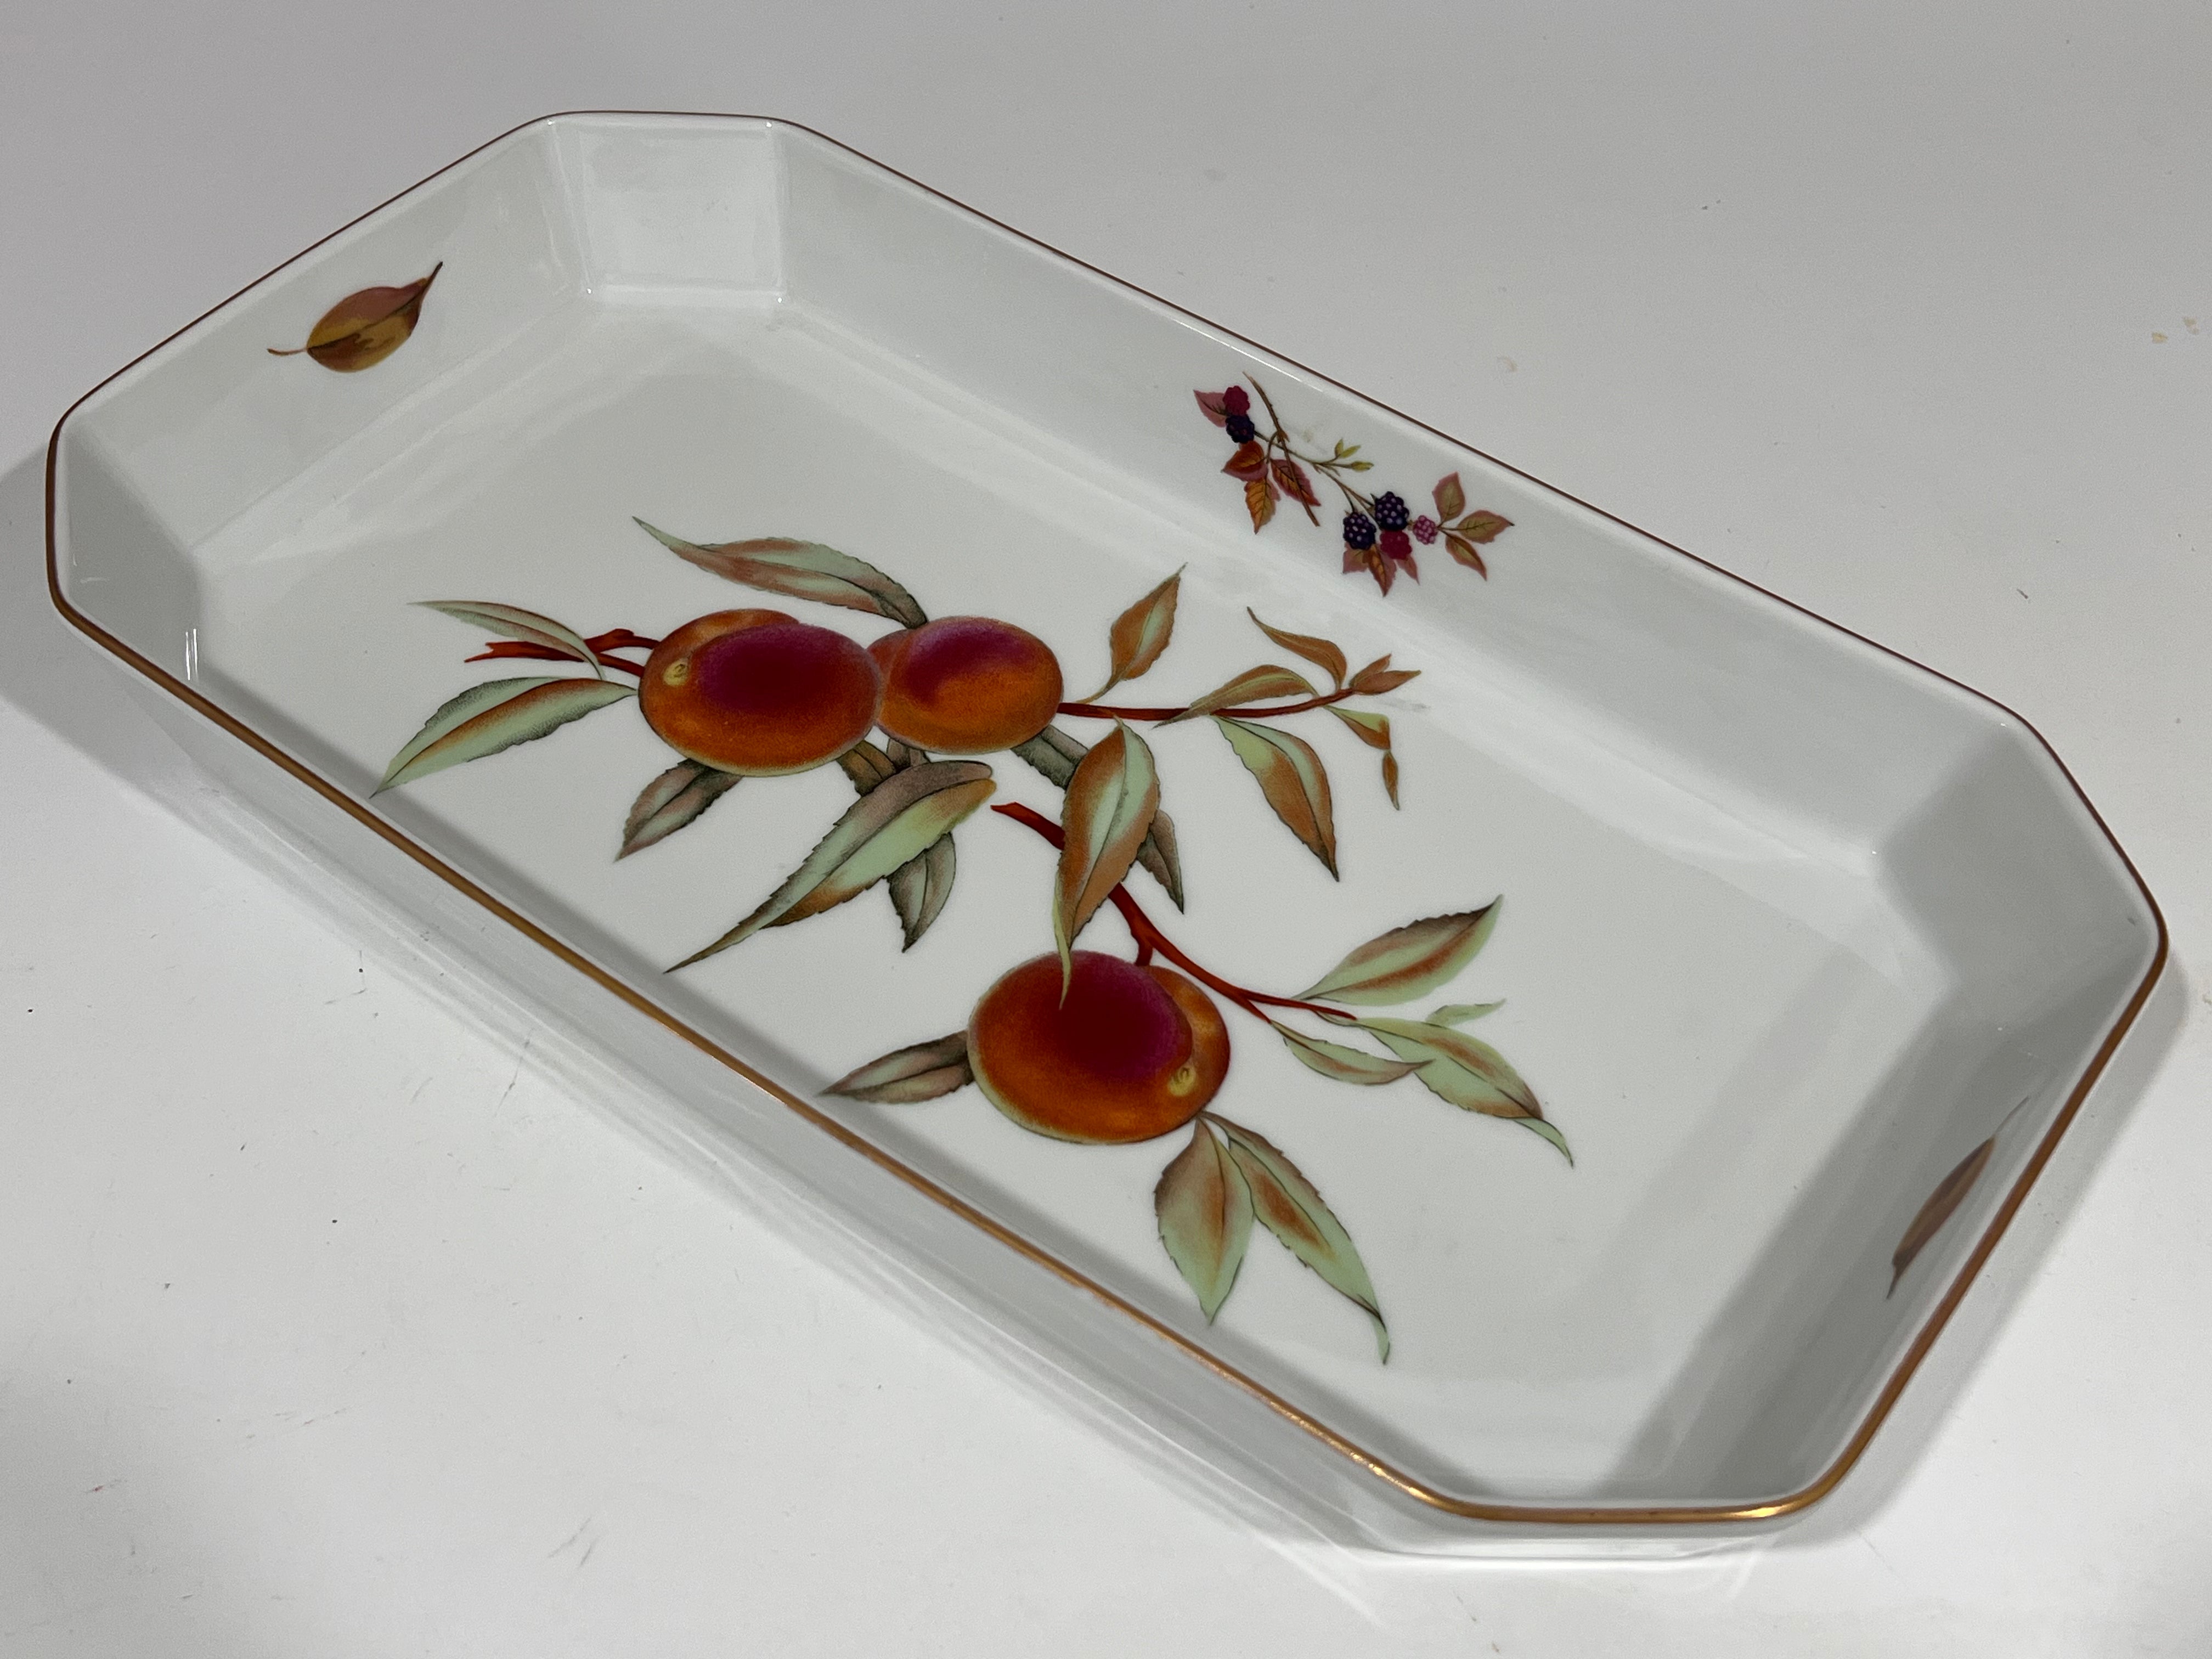 Royal Worchester Evesham Original Porcelain Fine China - Rectangular Platter - Gold Trim - From England